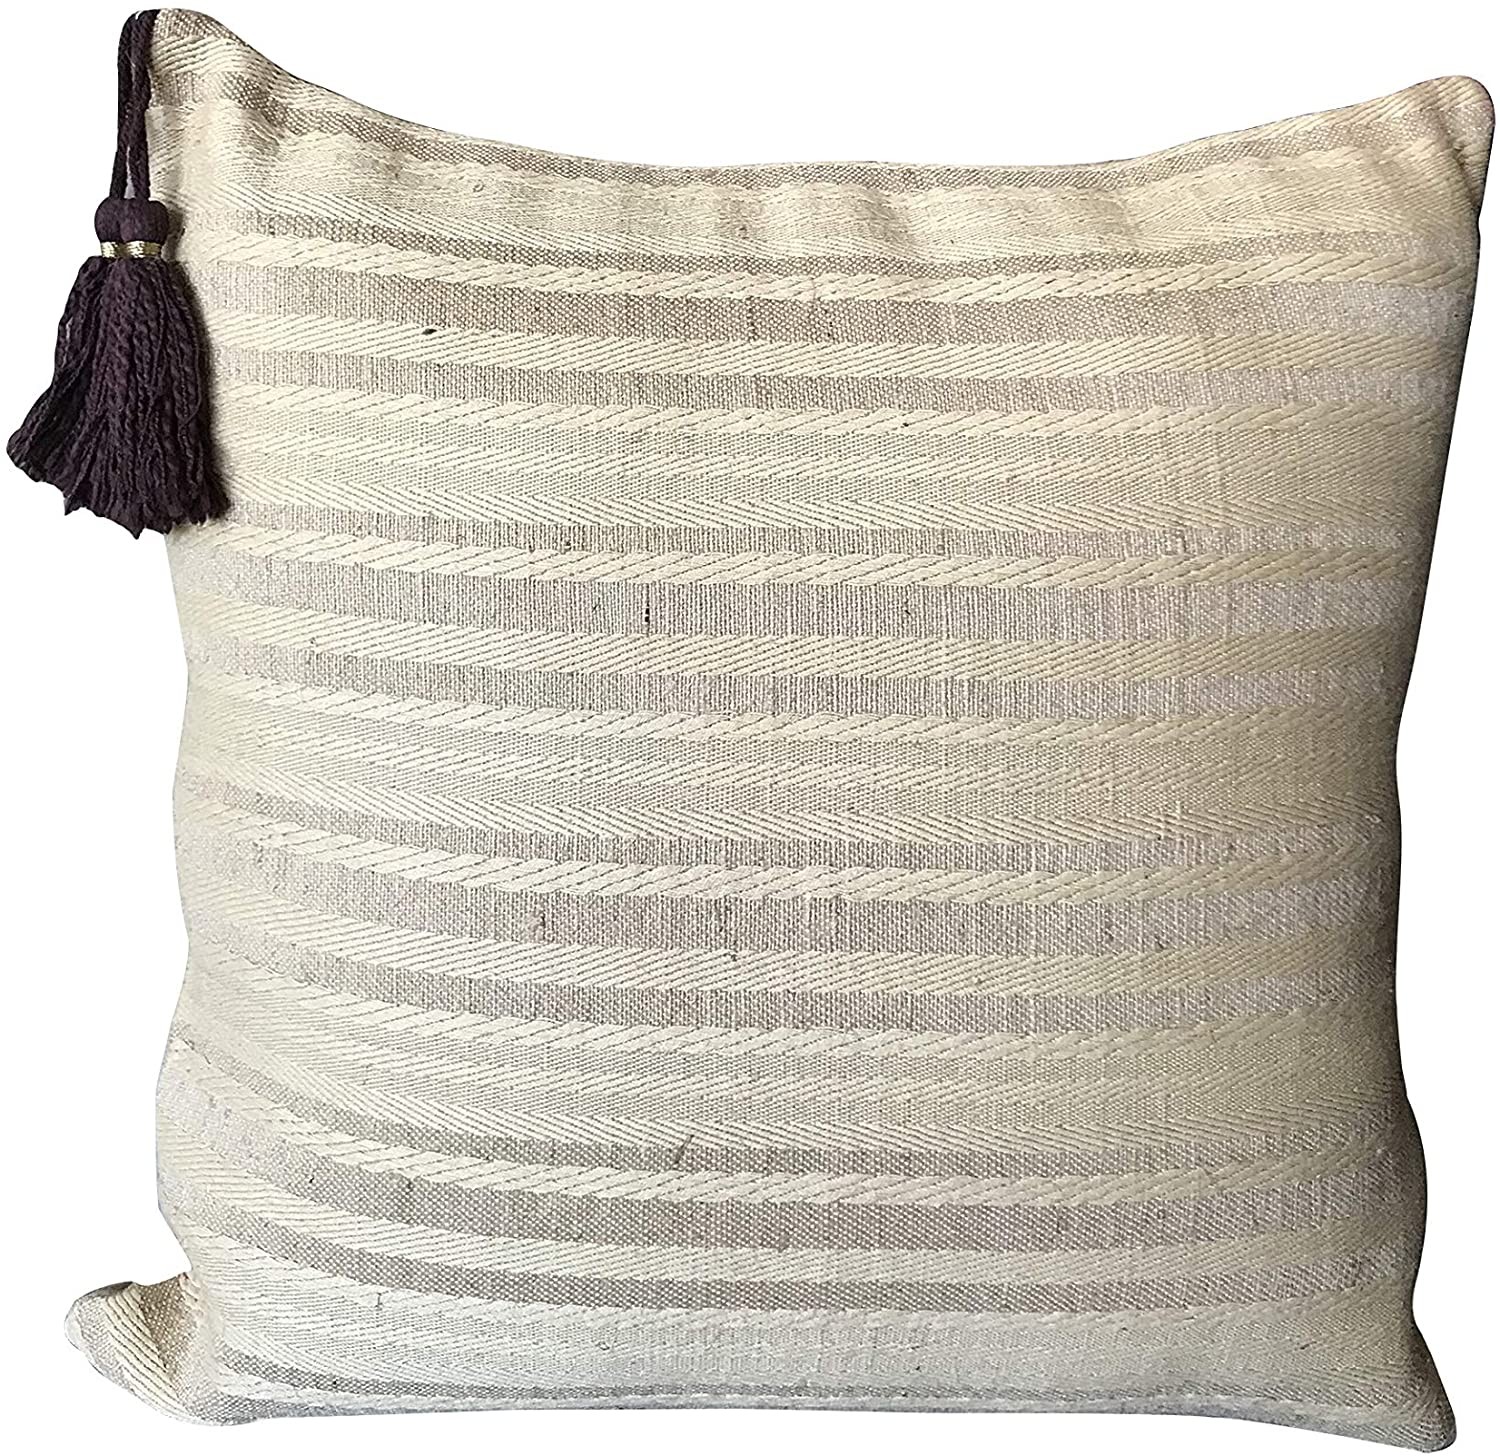 https://www.decorshore.com/1497/18-inch-throw-pillow-cover-tribal-boho-woven-pillowcase-tassels-soft-cushion-case-cream-beige-brown.jpg